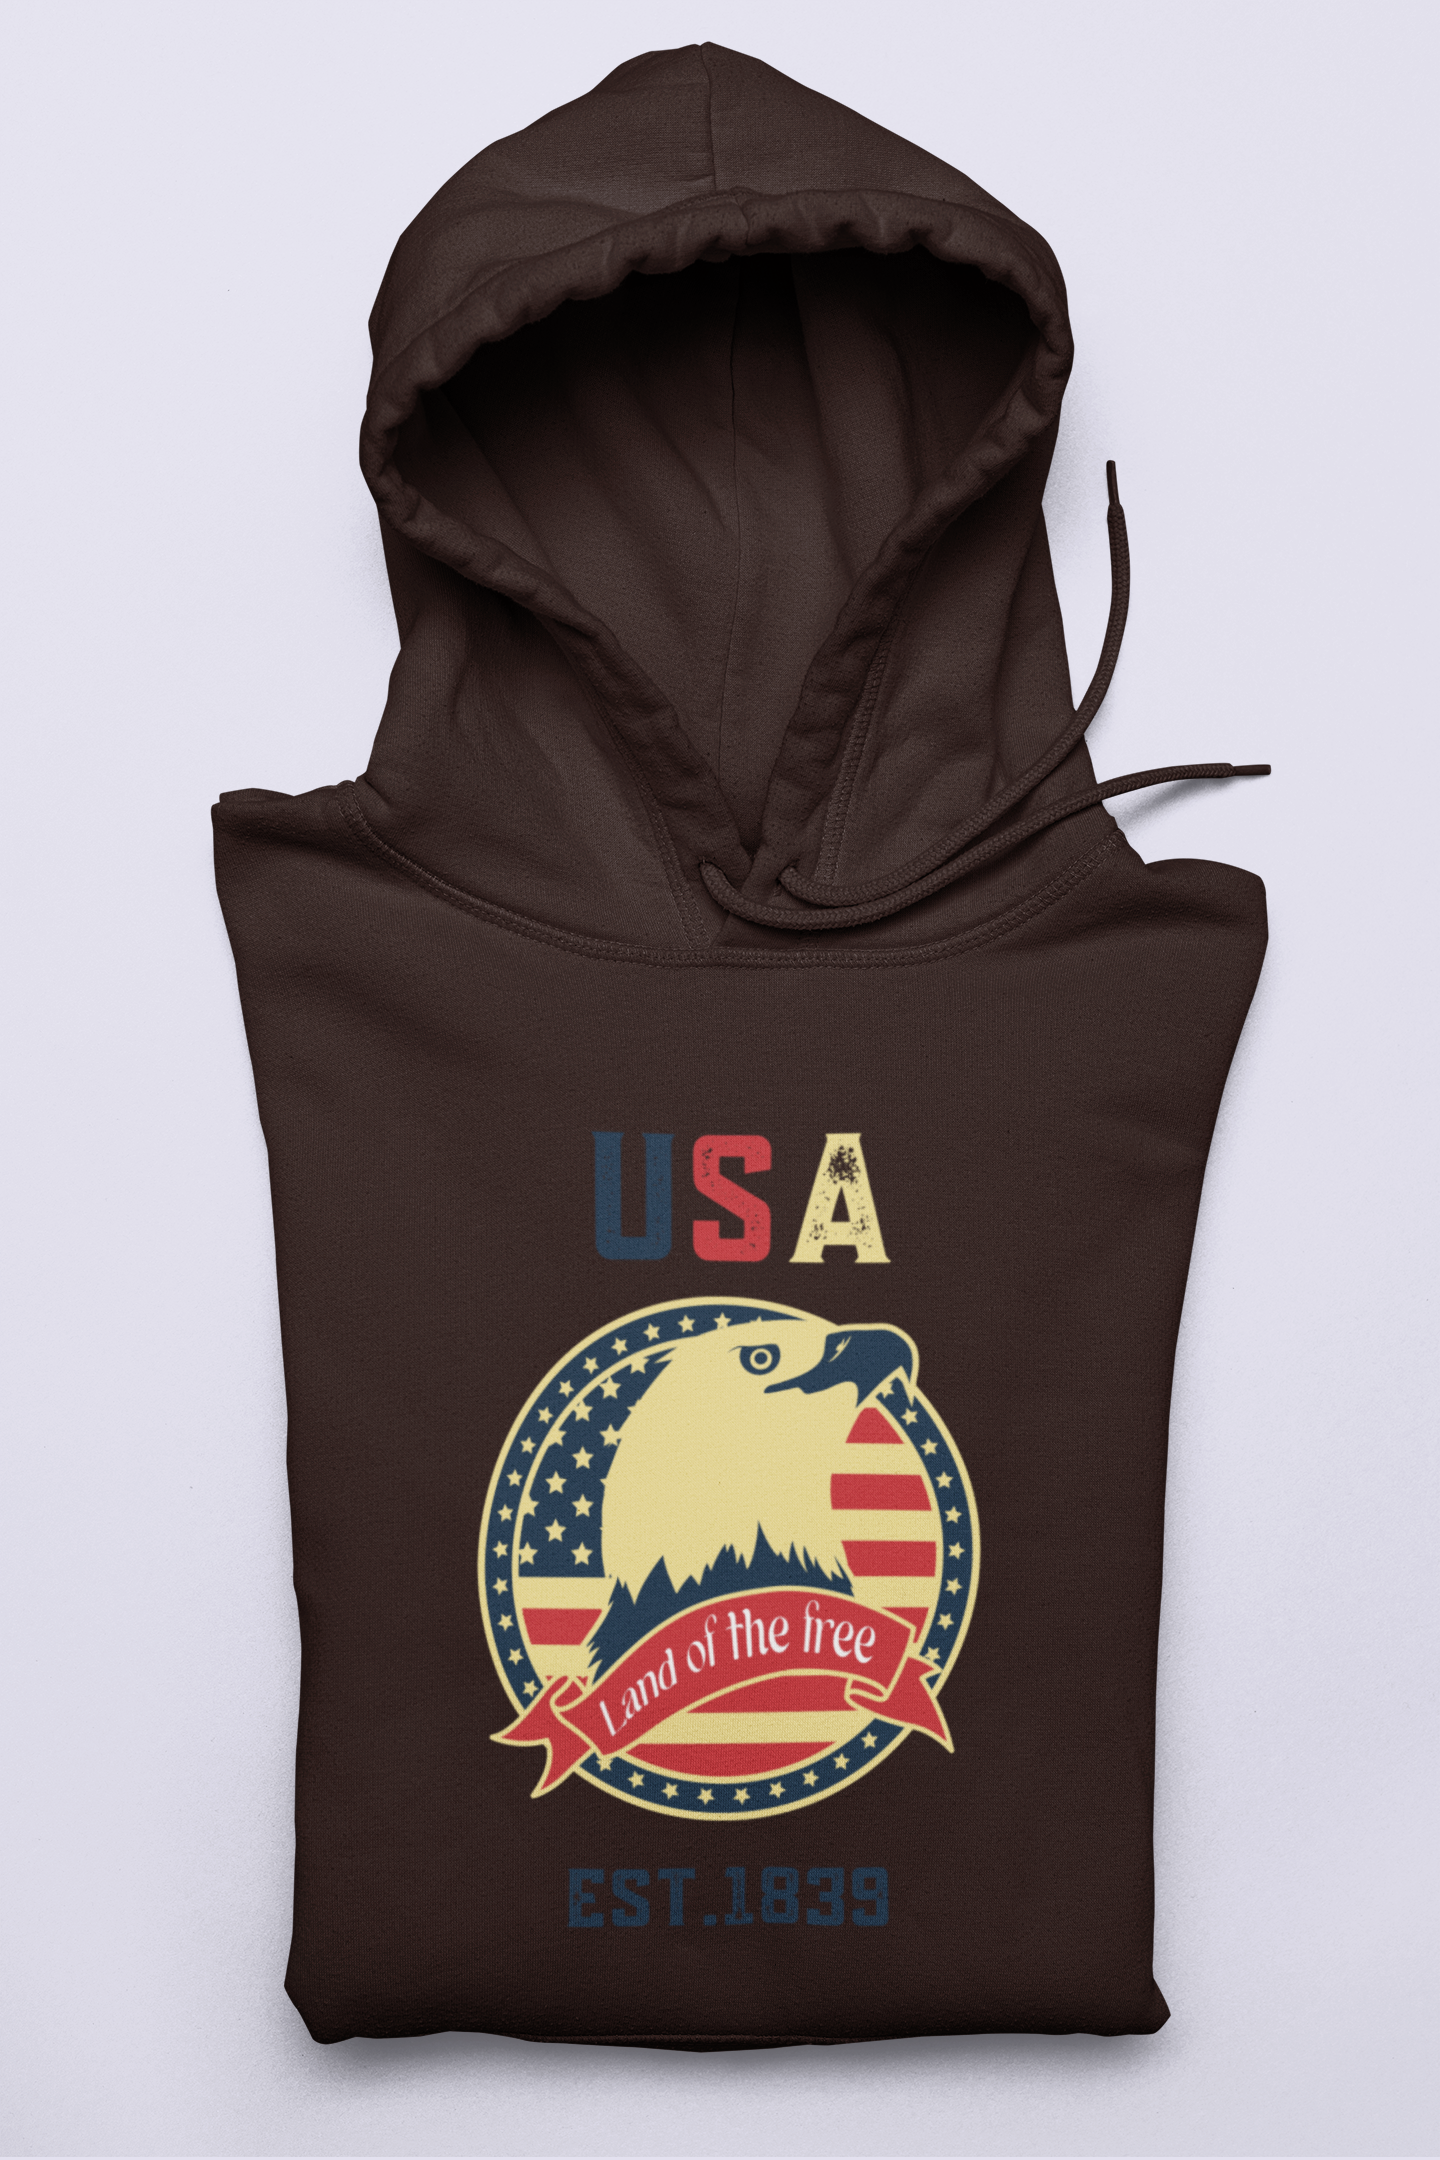 USA Land of the free | Retro Theme | Premium Unisex Winter Hoodie